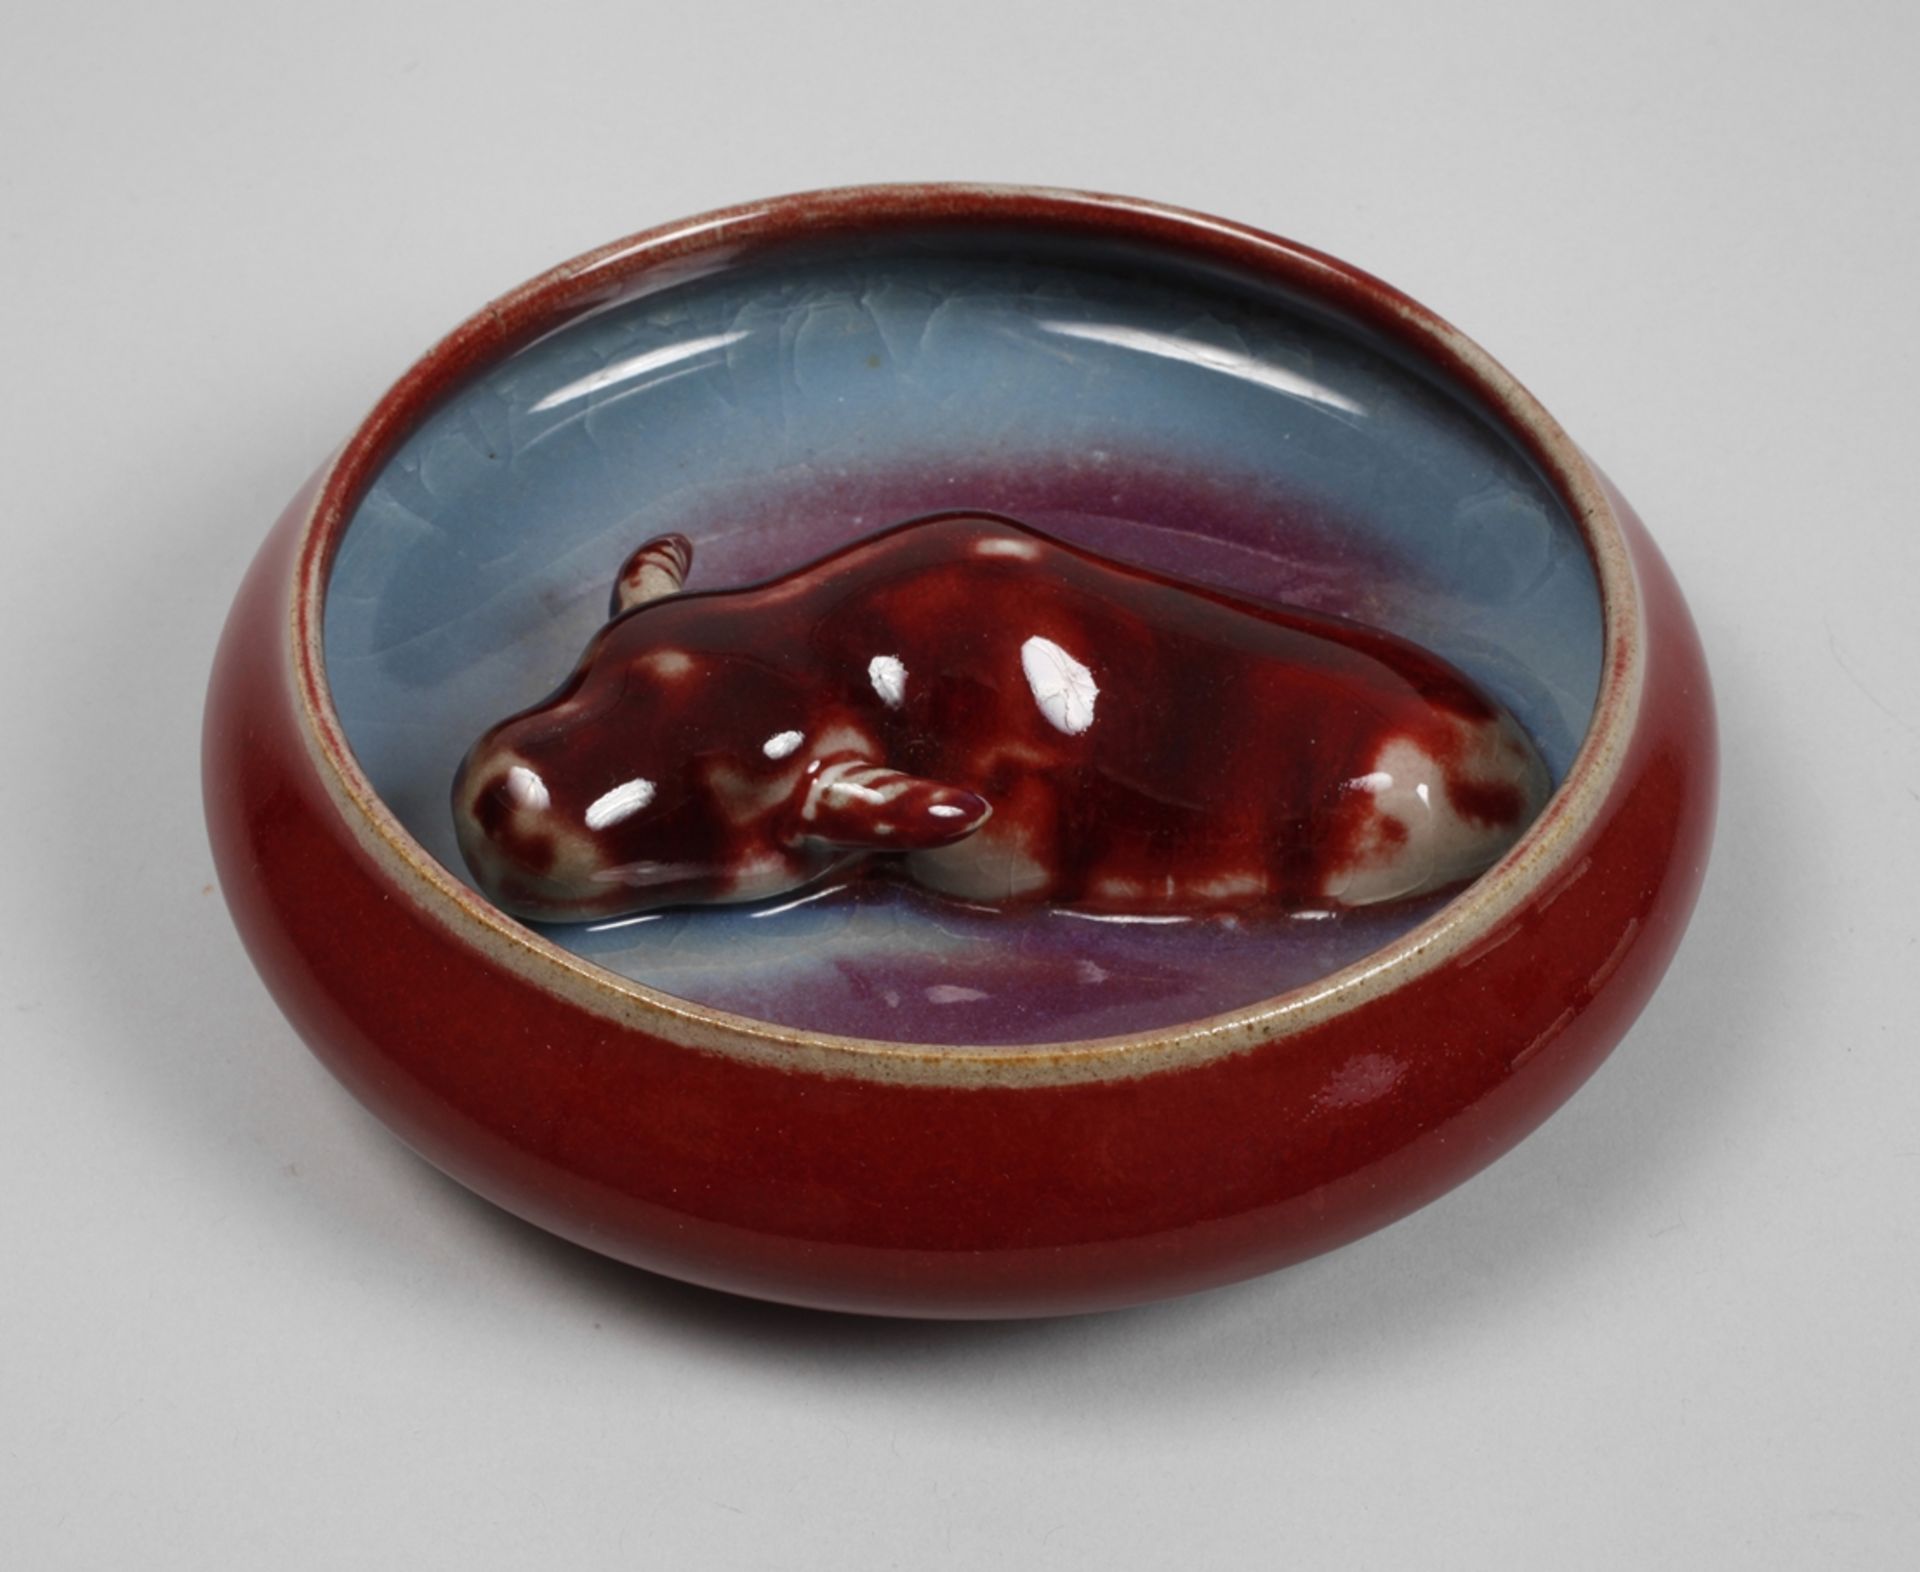 Decorative Sang de Boeuf bowl